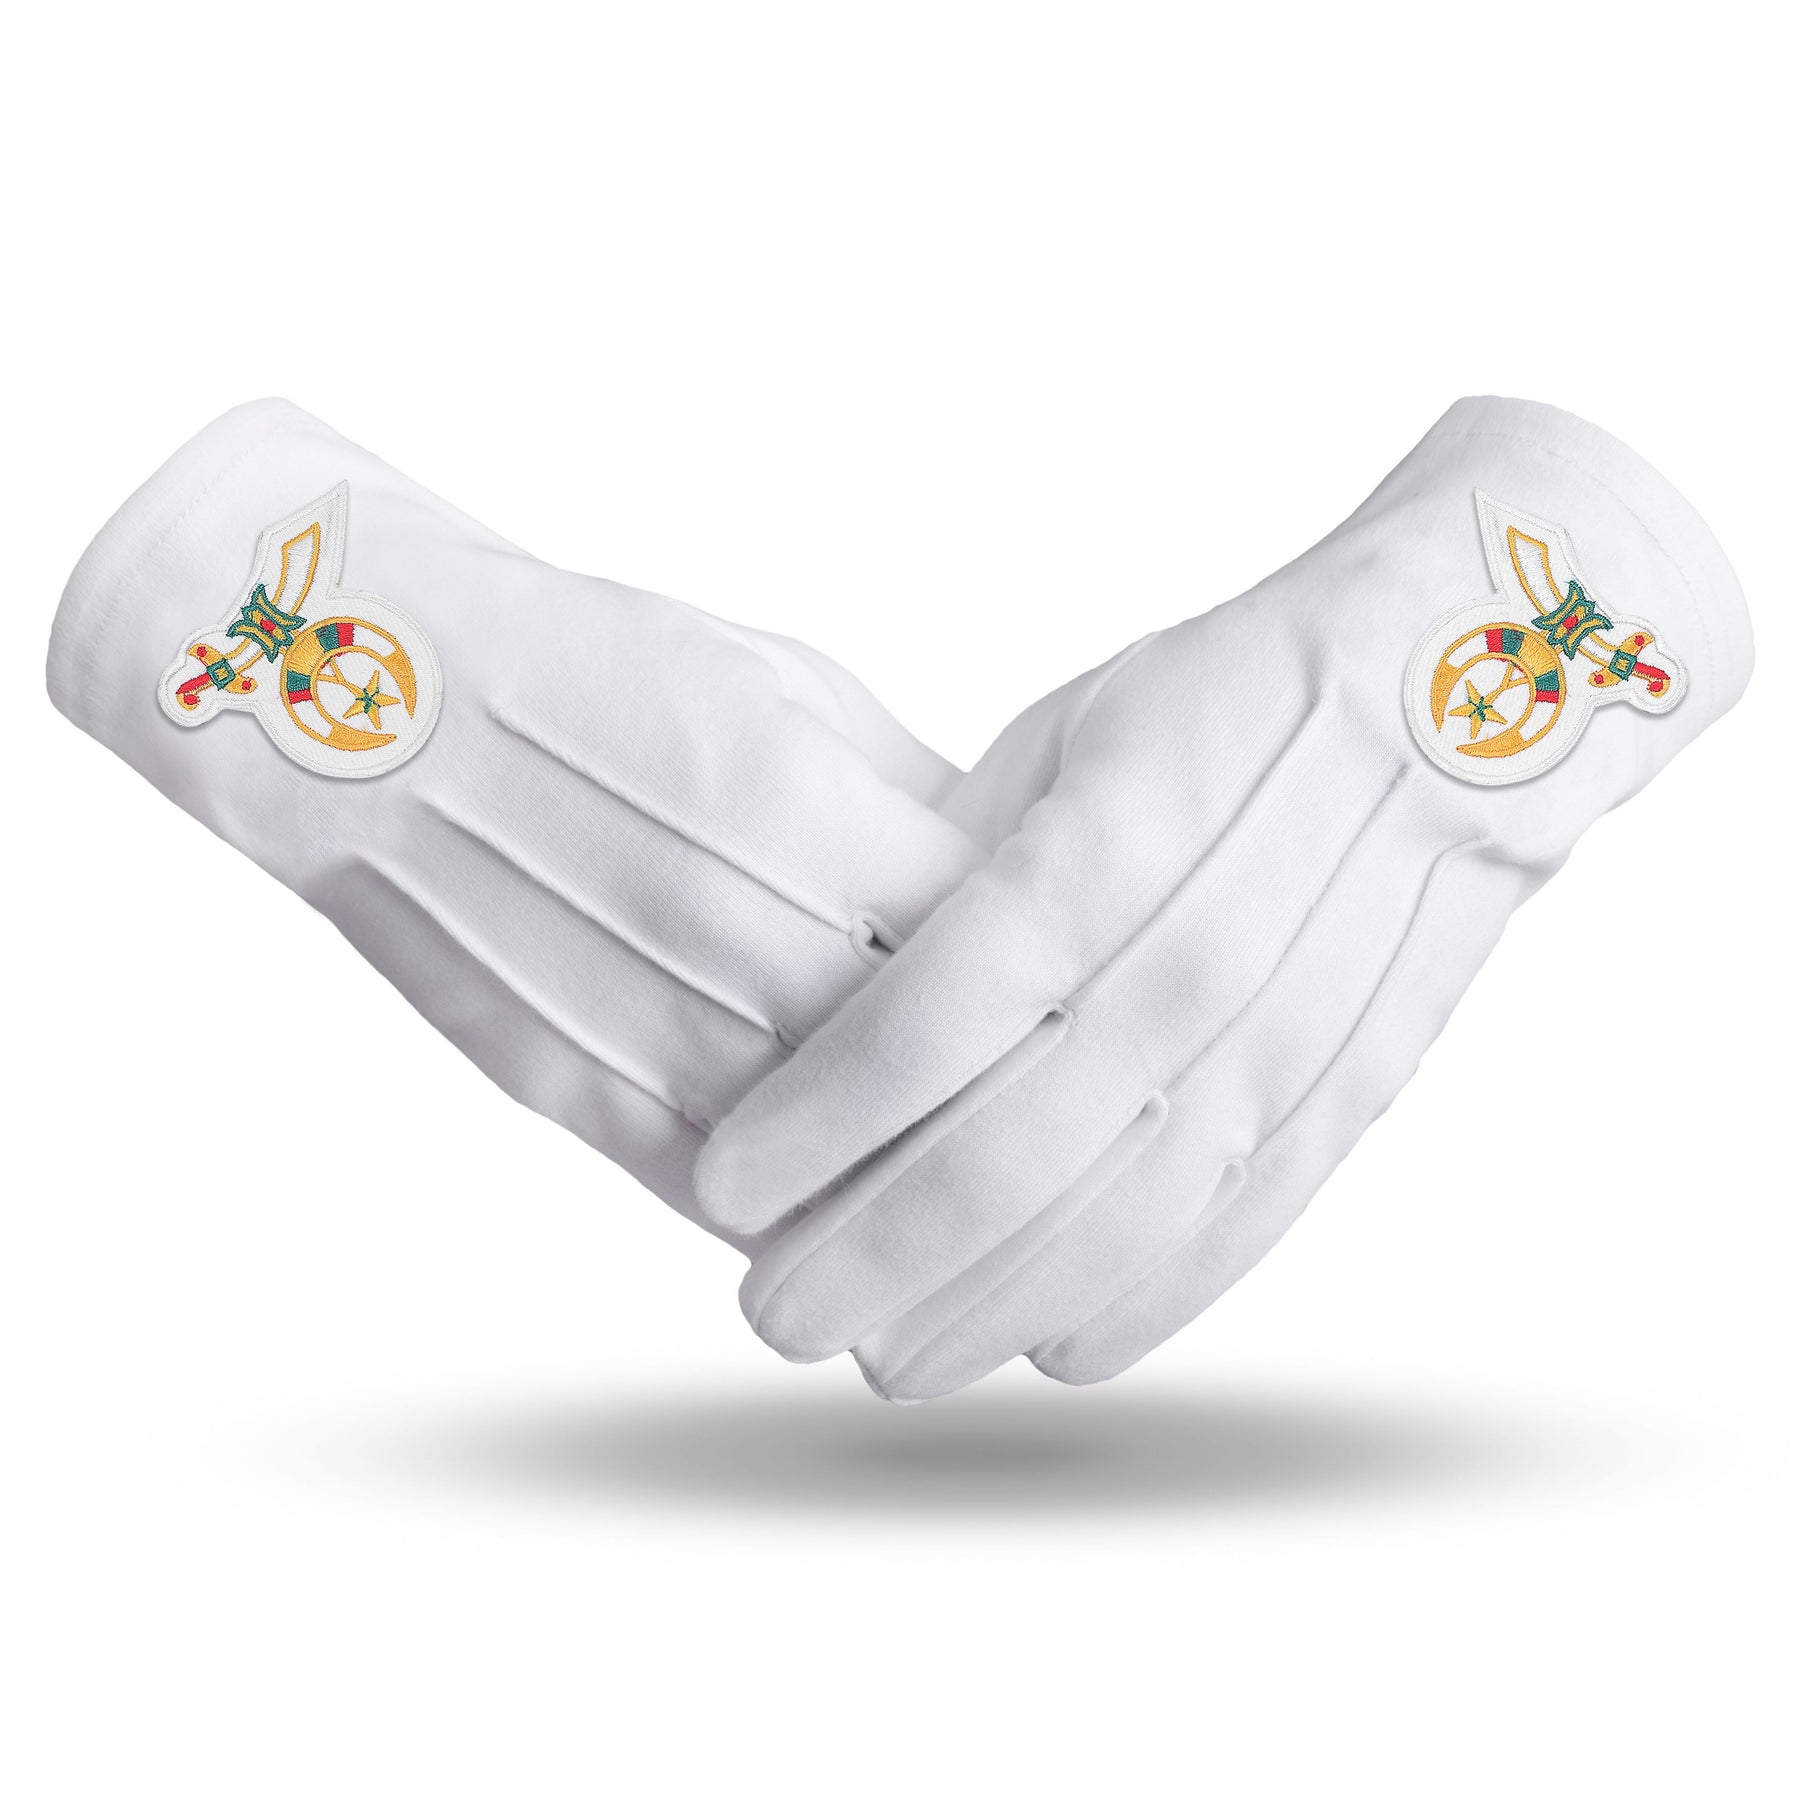 Shriners Glove - White Cotton With Gold Emblem - Bricks Masons